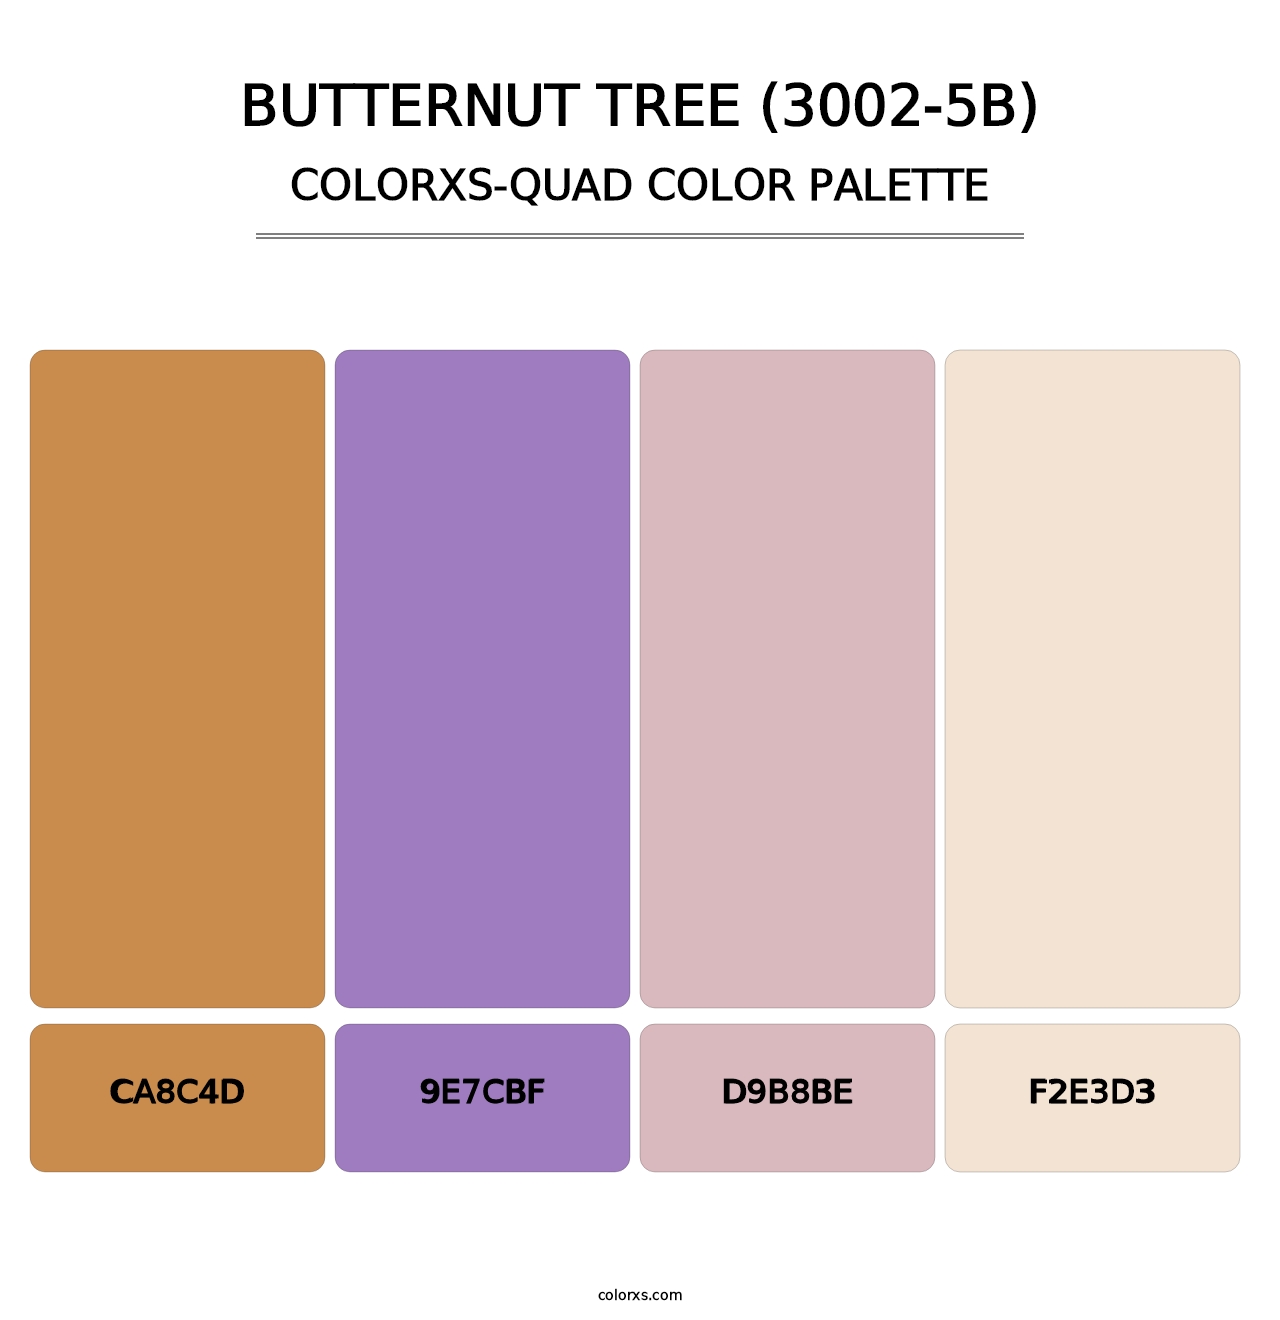 Butternut Tree (3002-5B) - Colorxs Quad Palette